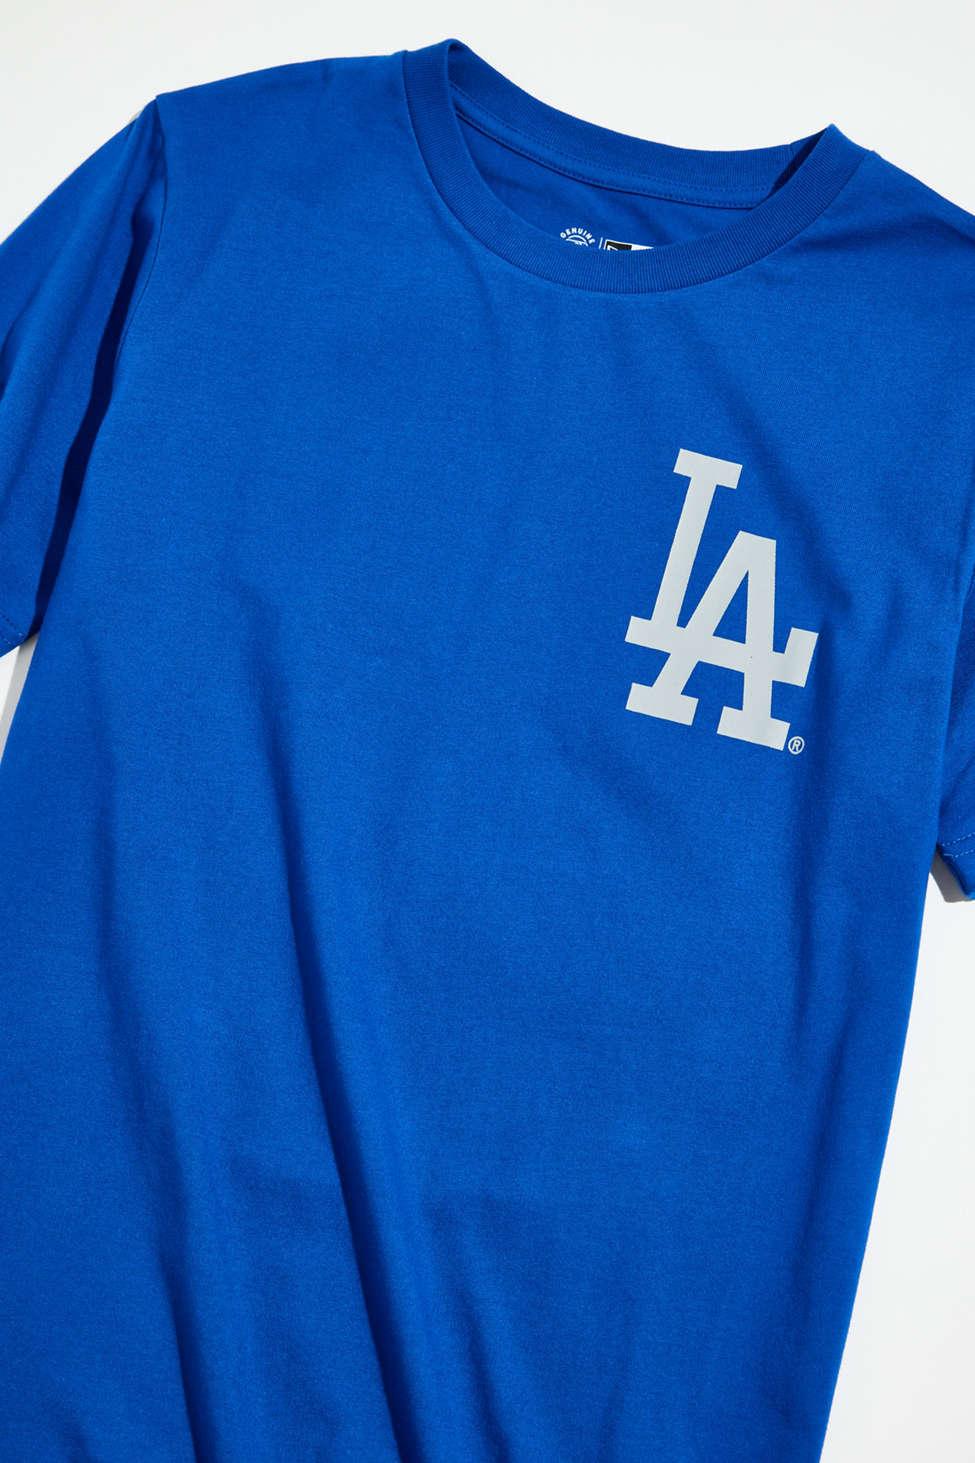 Men's New Era Royal Los Angeles Dodgers Team Tie-Dye T-Shirt